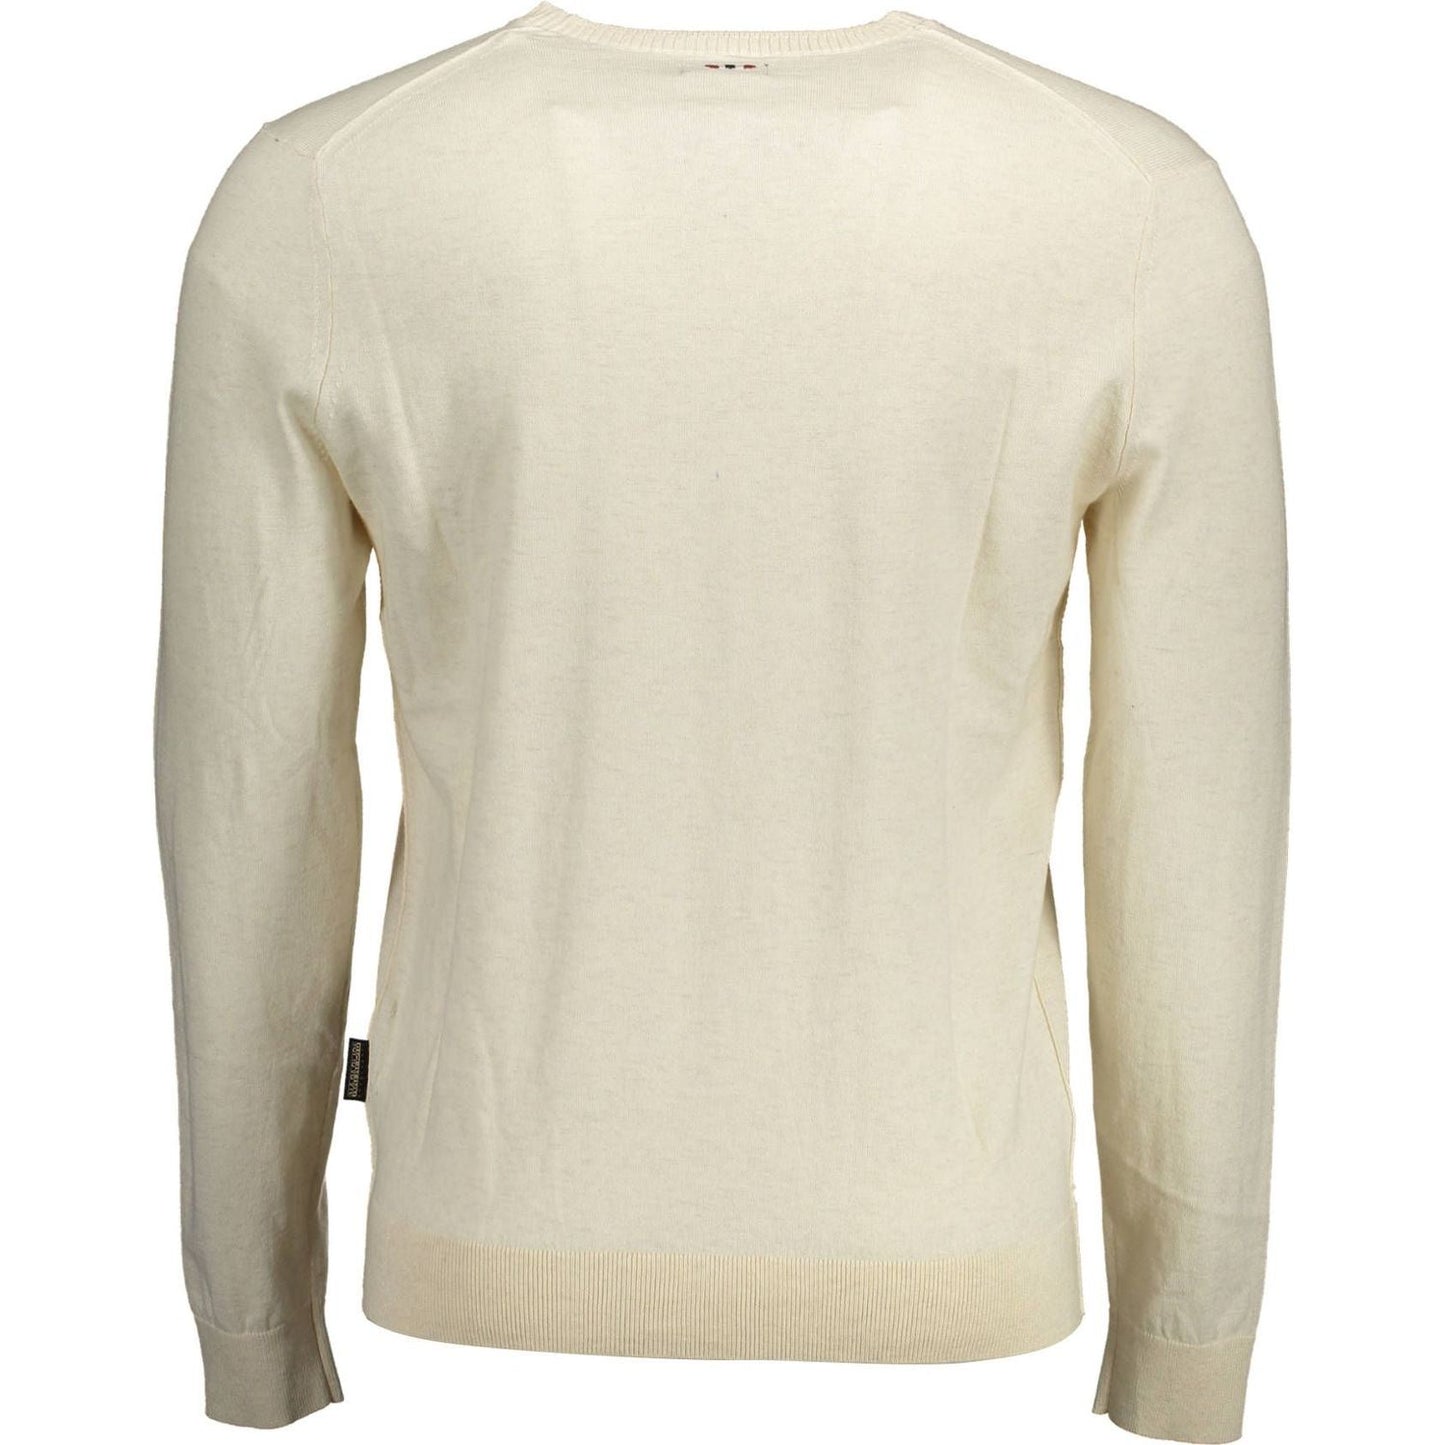 Napapijri Beige Cotton Crew-Neck Embroidered Sweater beige-cotton-crew-neck-embroidered-sweater